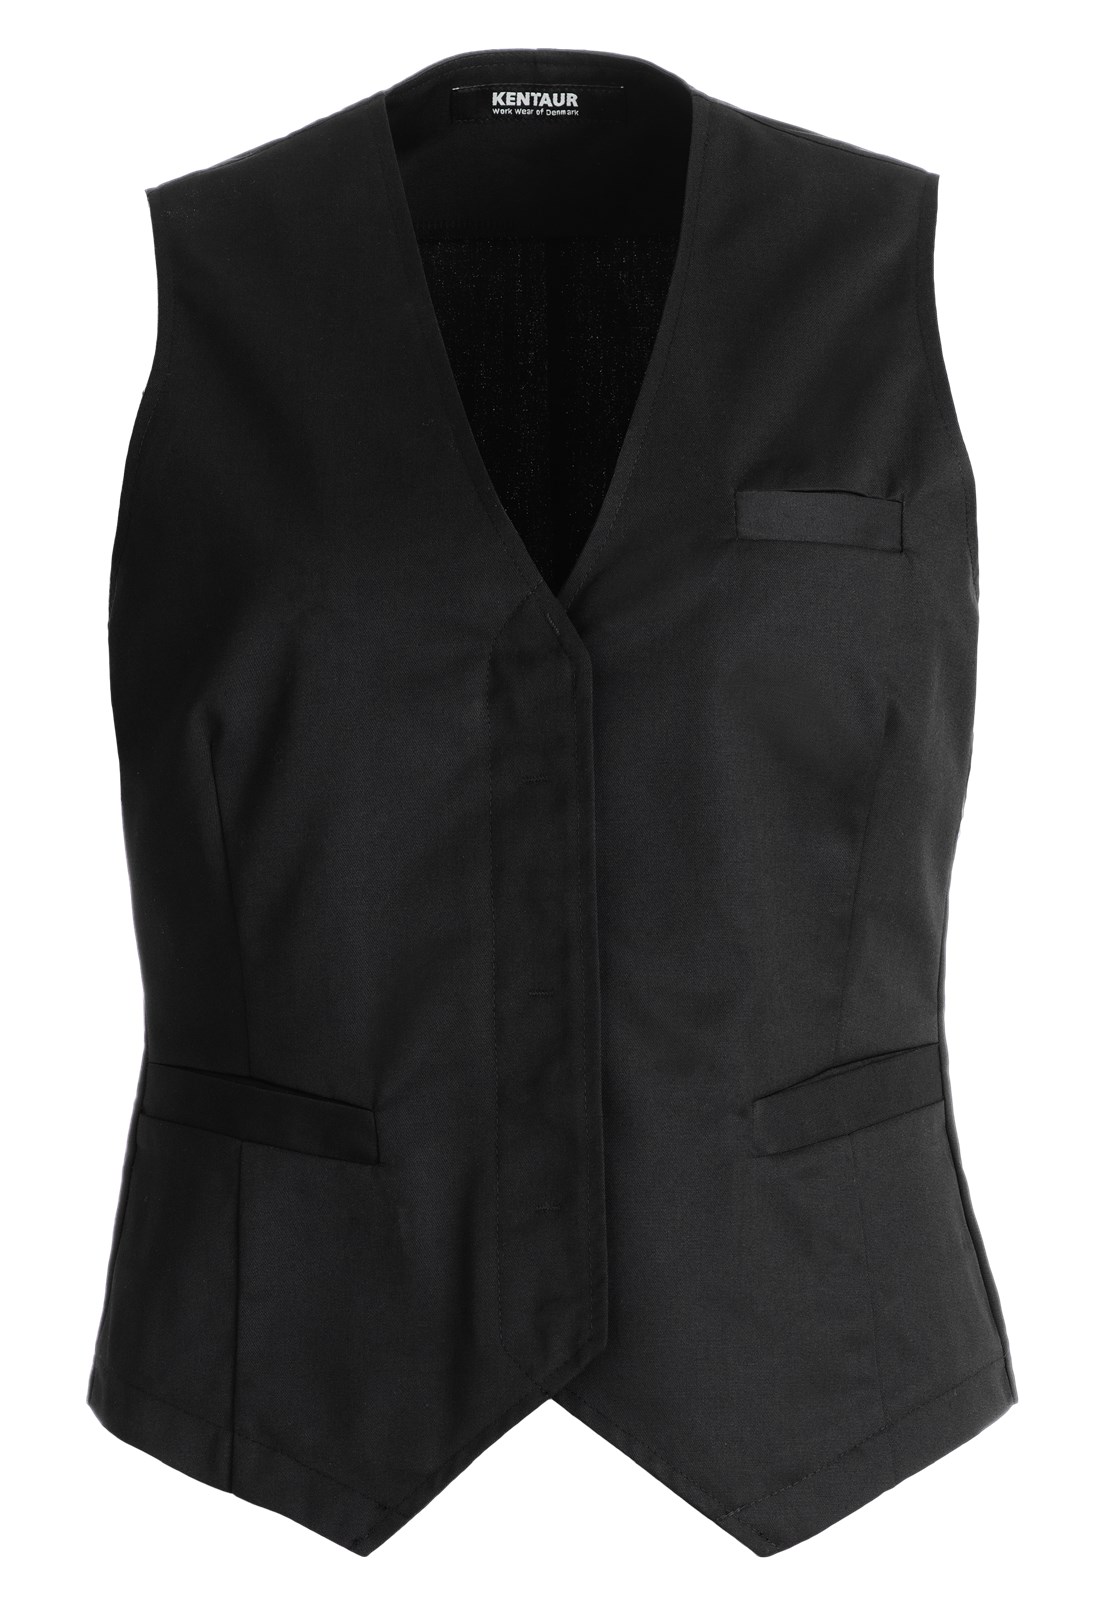 Hobart Raadplegen Draad Dames vest/gilet kleur zwart | Mediwear